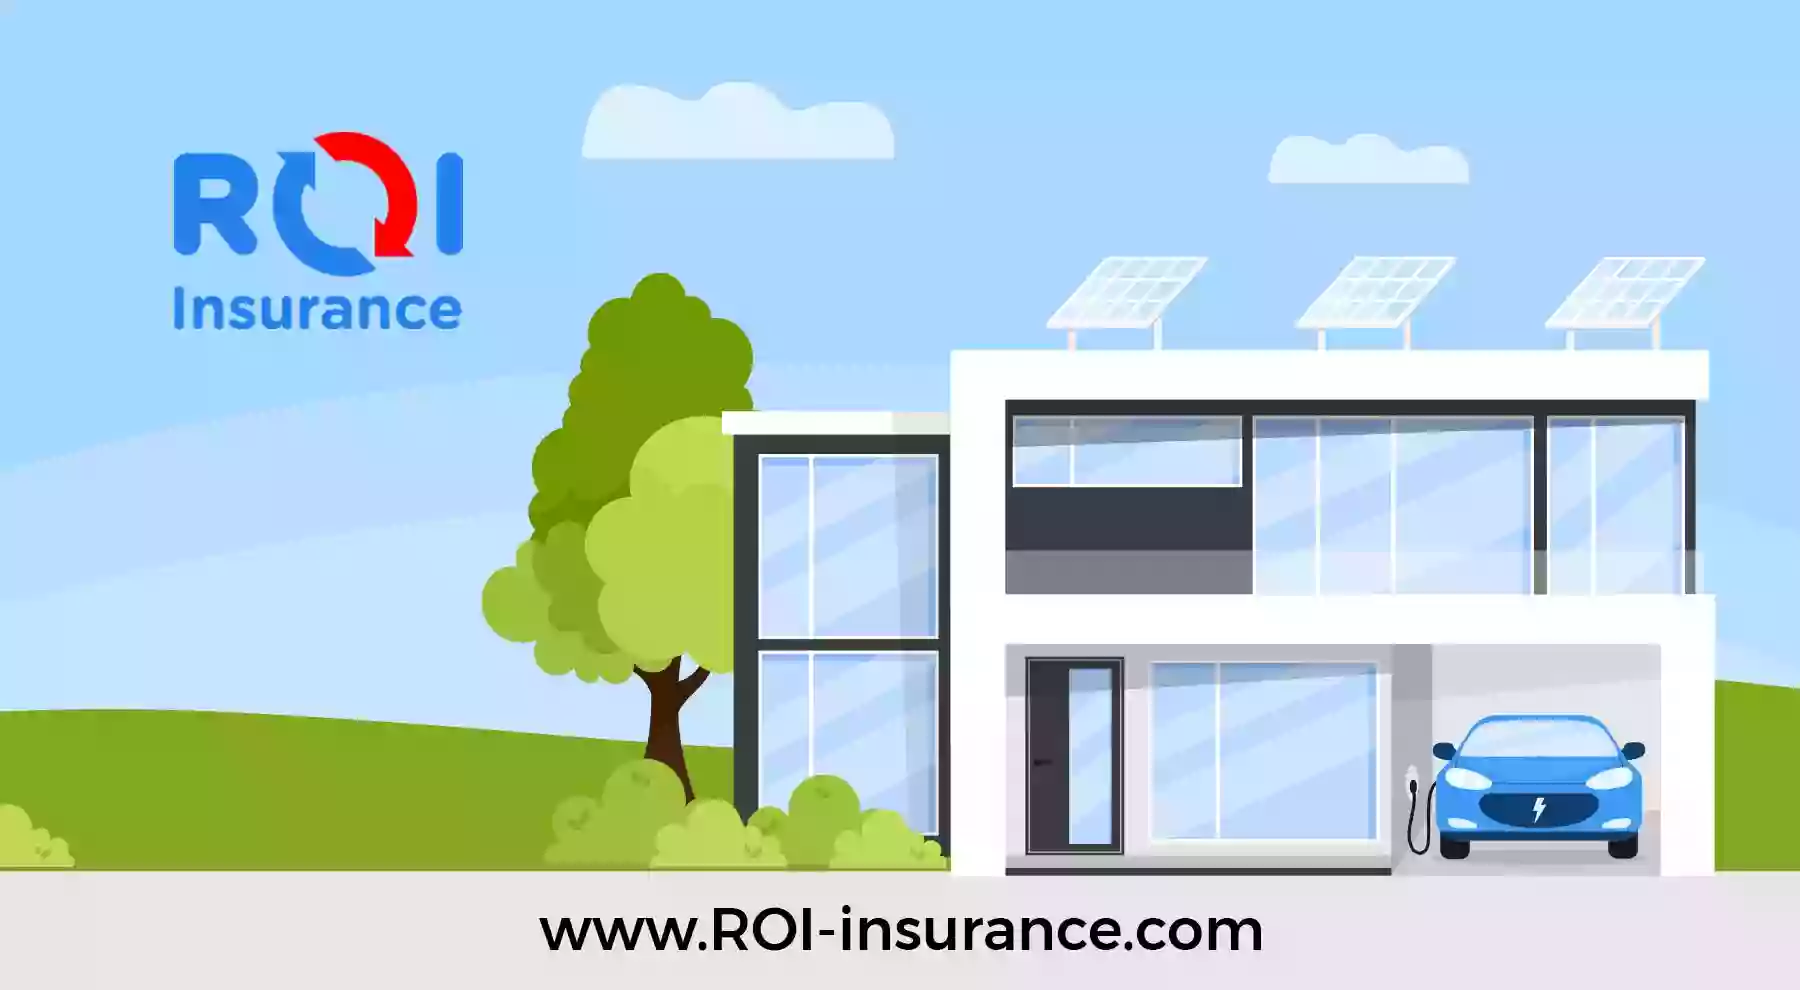 ROI Insurance